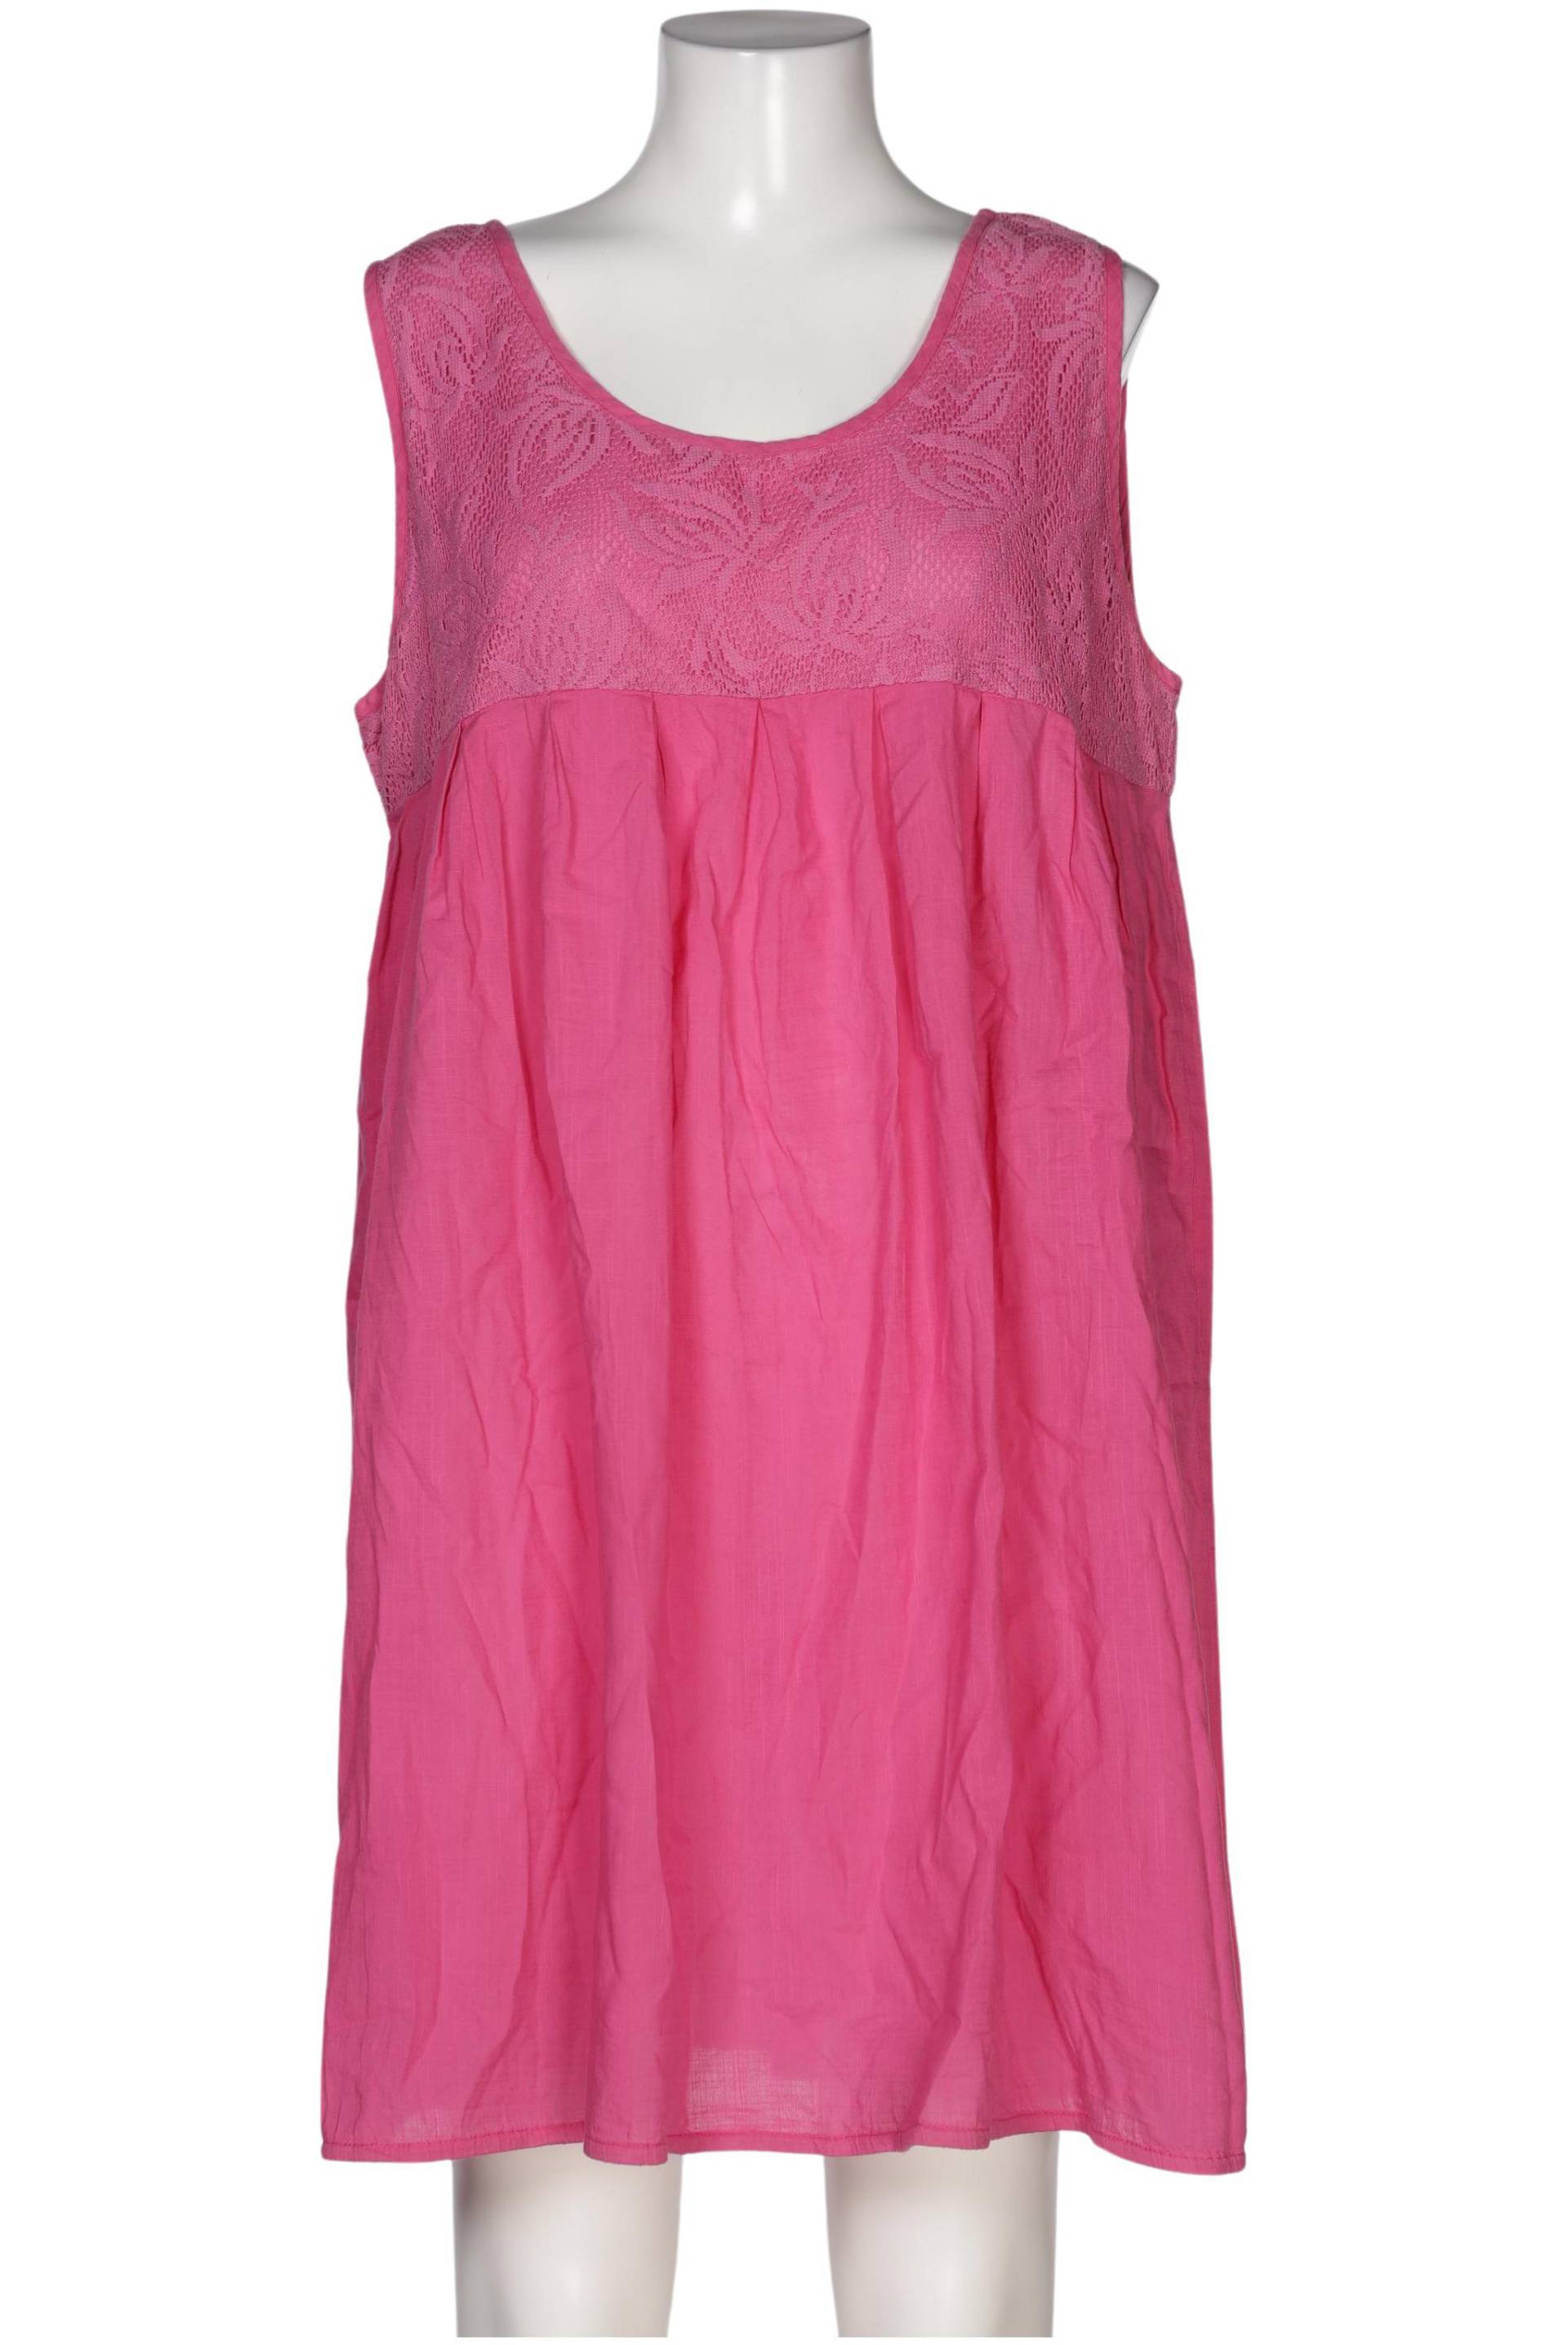 Deerberg Damen Kleid, pink, Gr. 42 von Deerberg